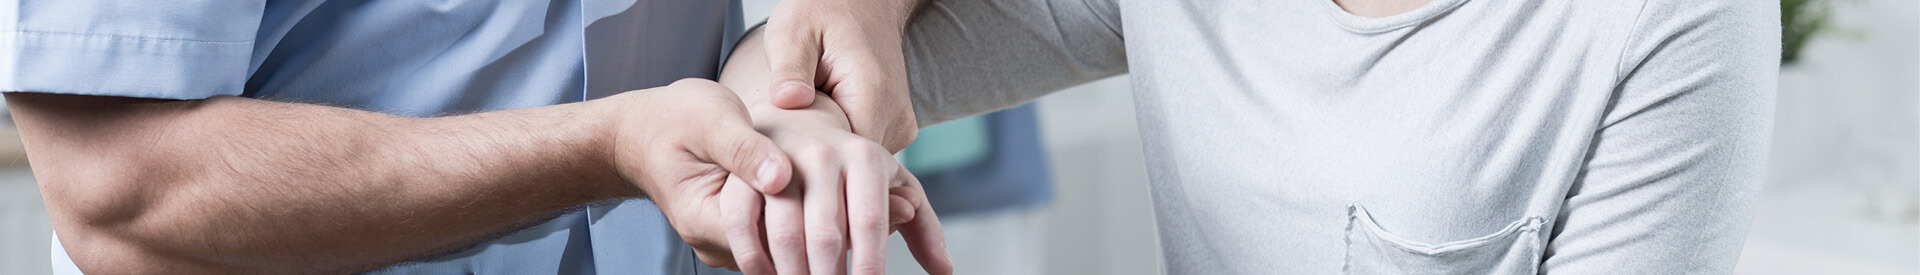 Provider Examining Patient's Wrist